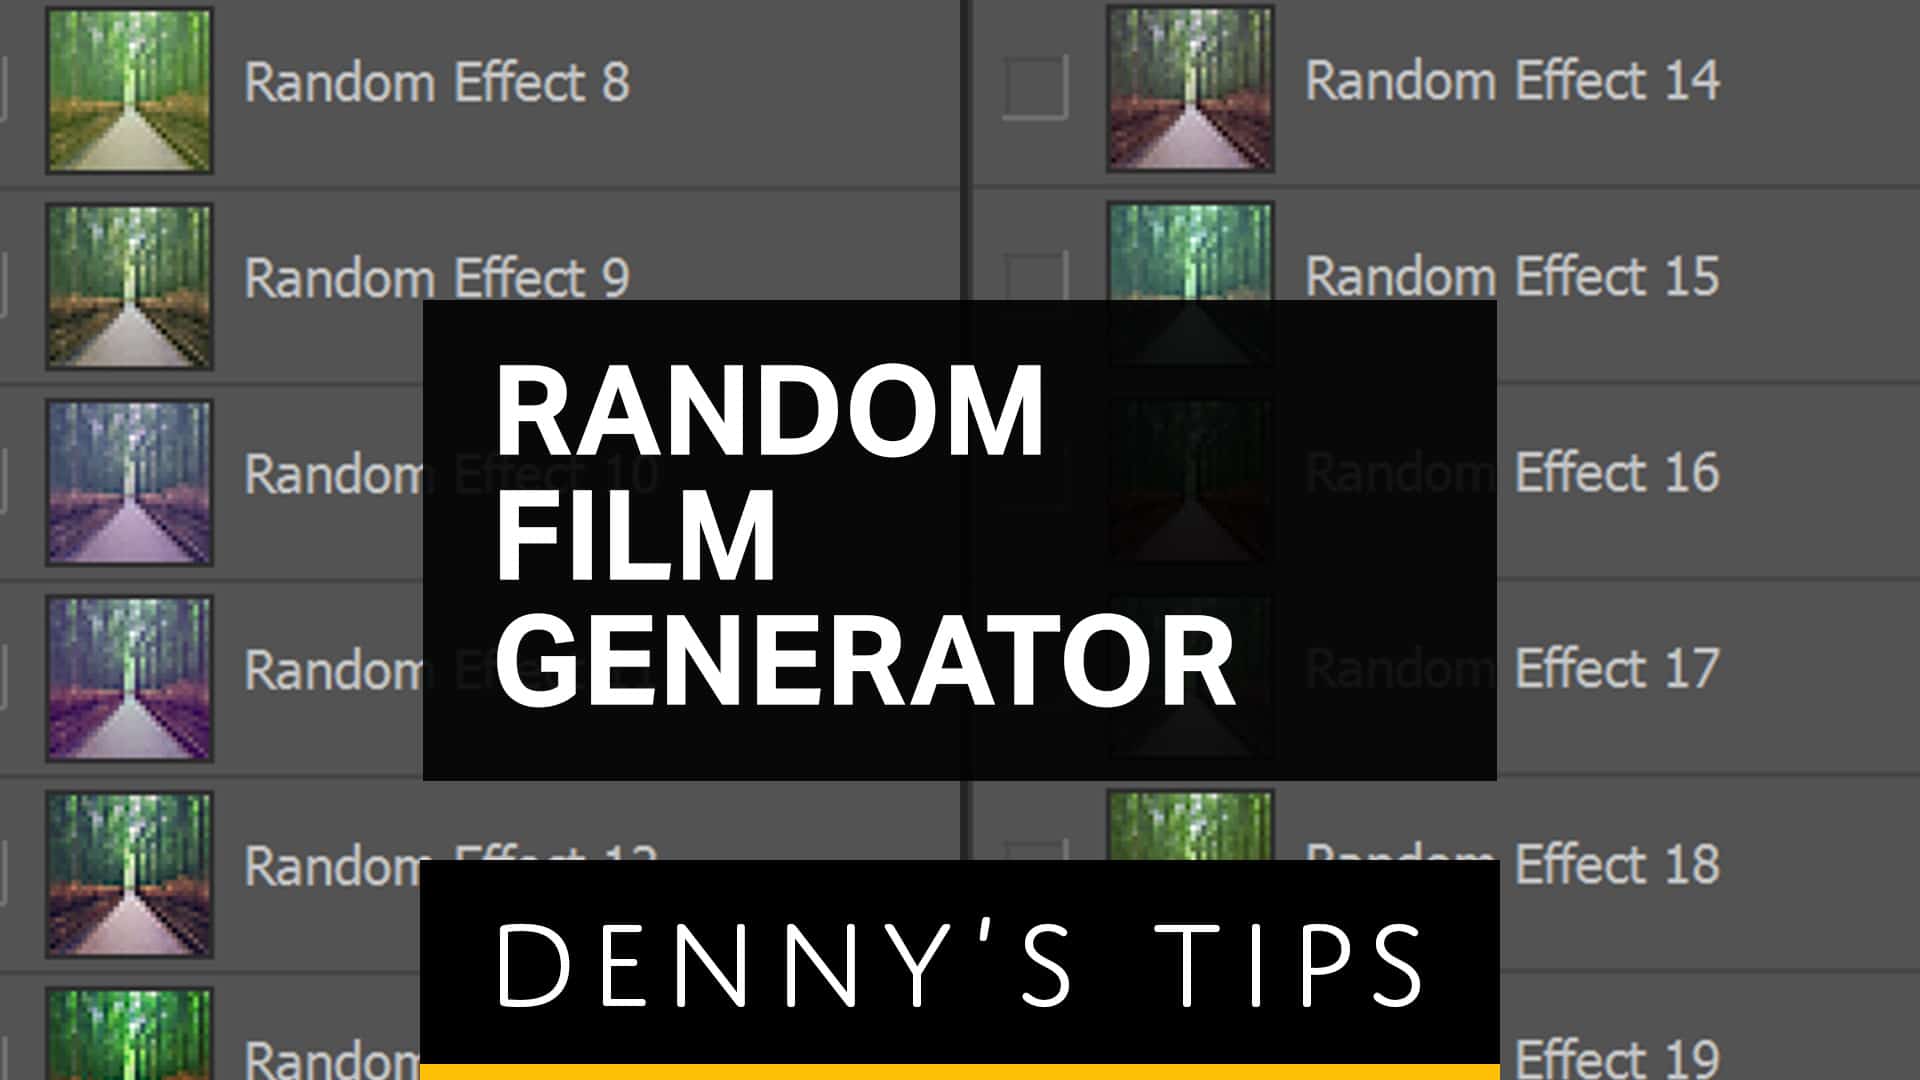 Random Film Generator for Photoshop